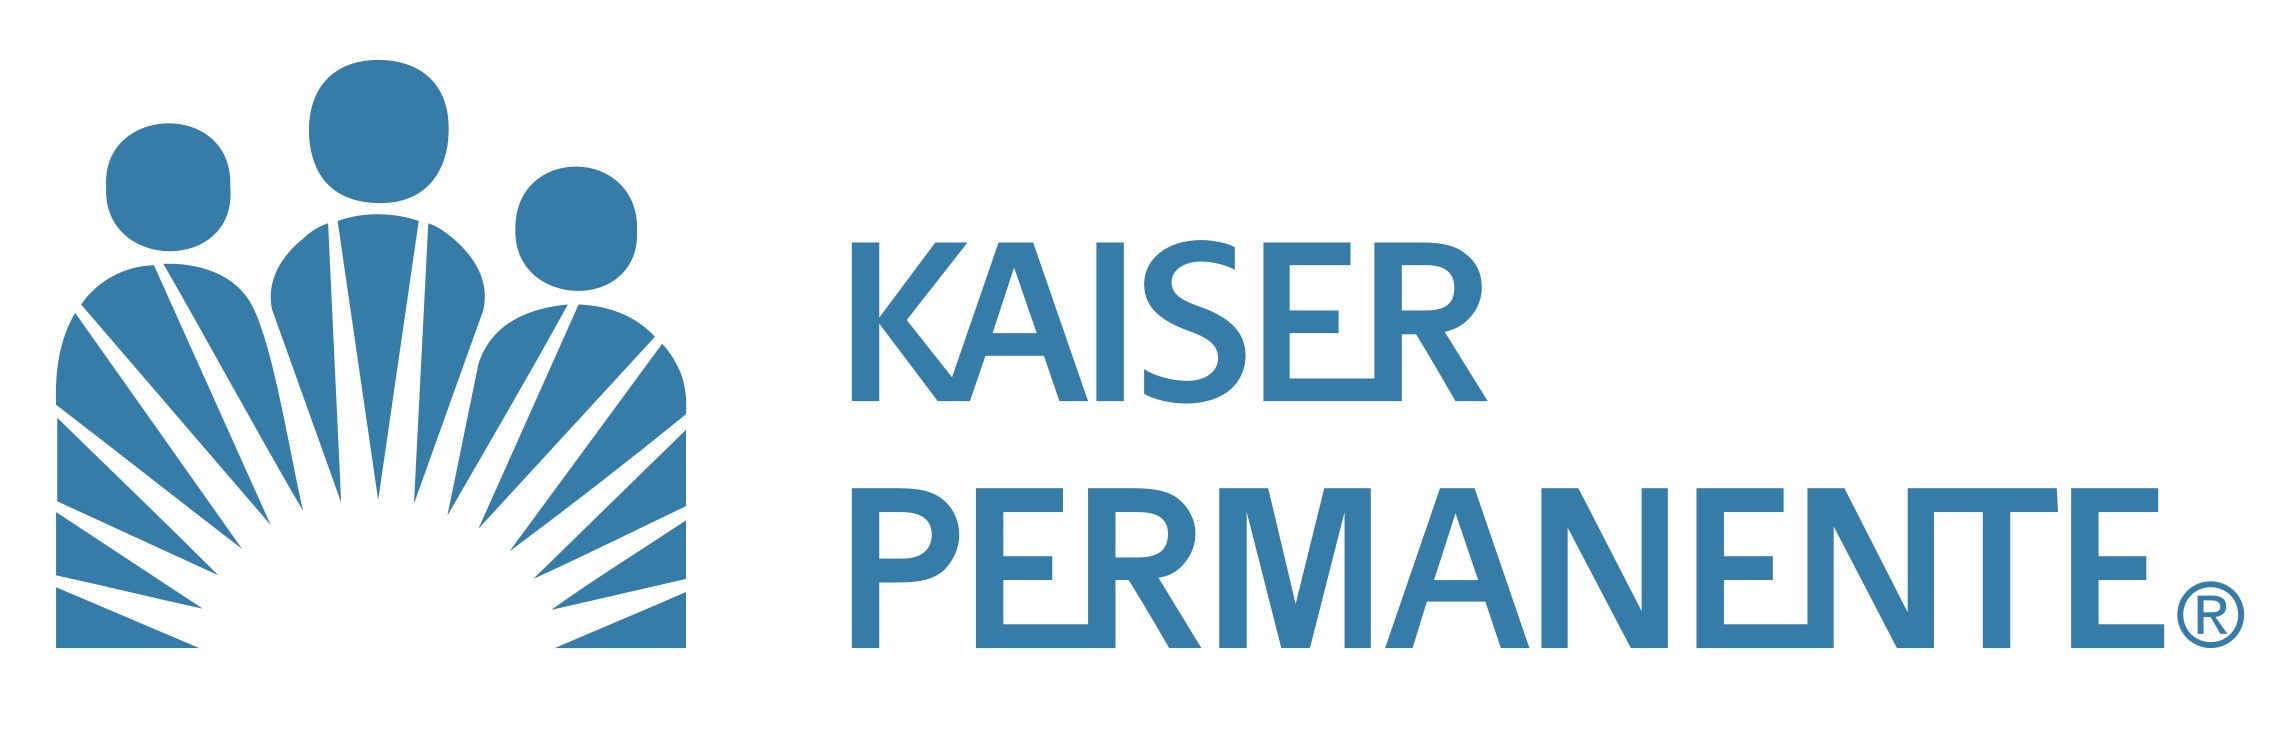 kaiser-permanente-logo-png-transparent.jpg